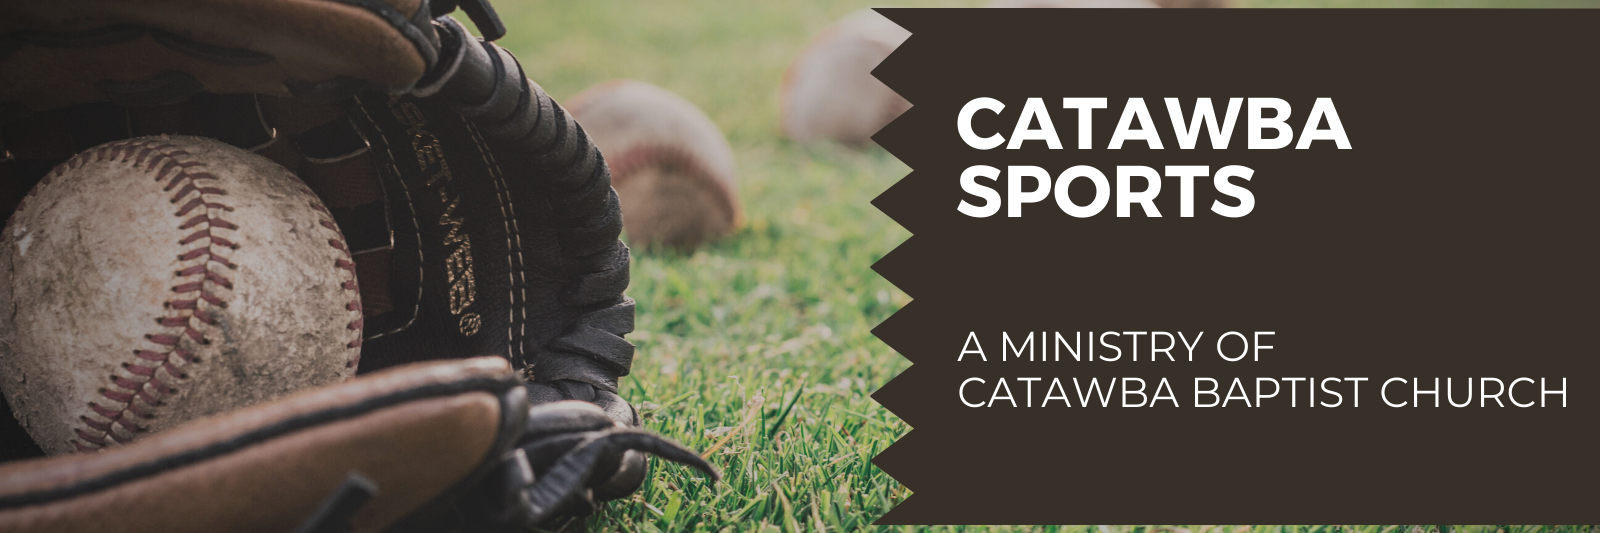 Catawba Sports